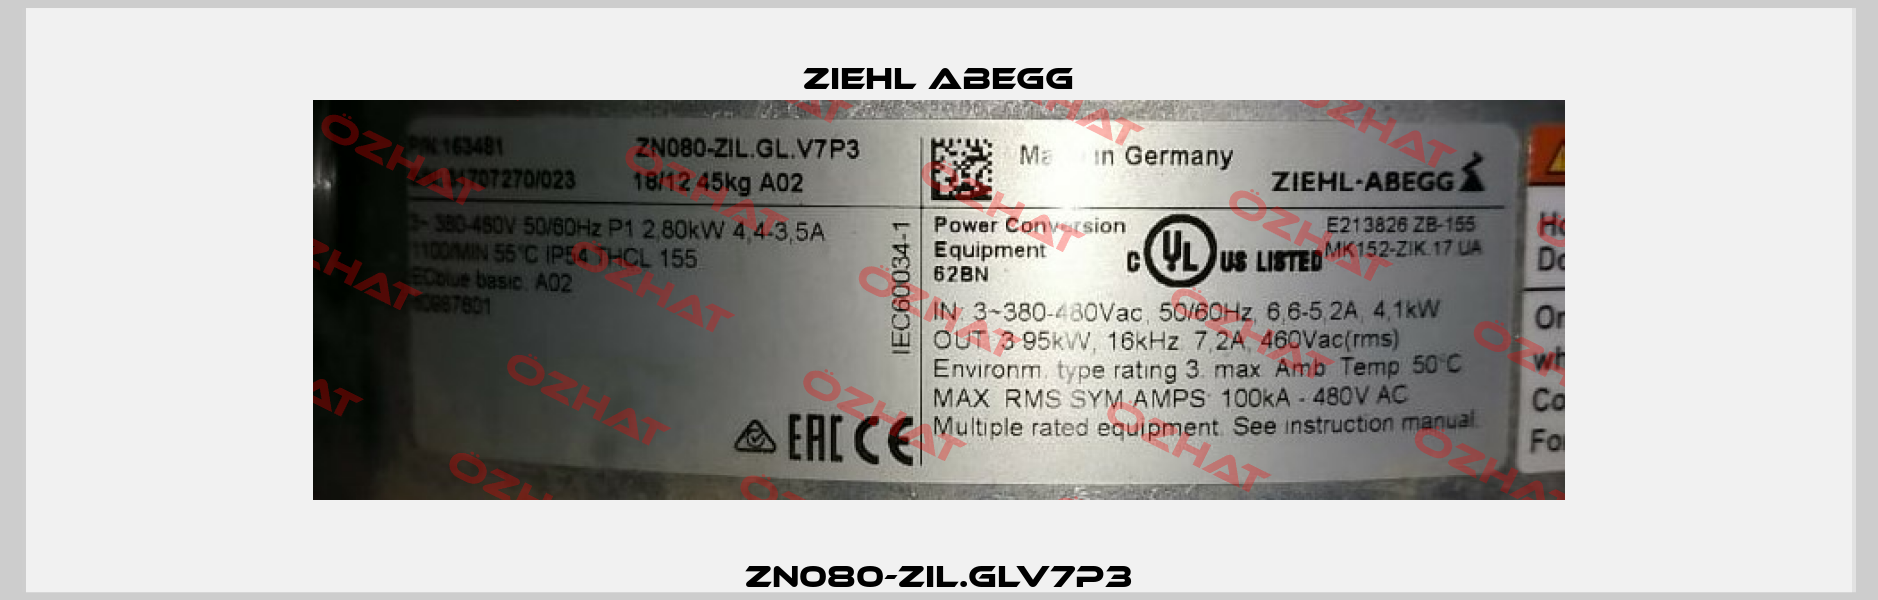 ZN080-ZIL.GLV7P3 Ziehl Abegg